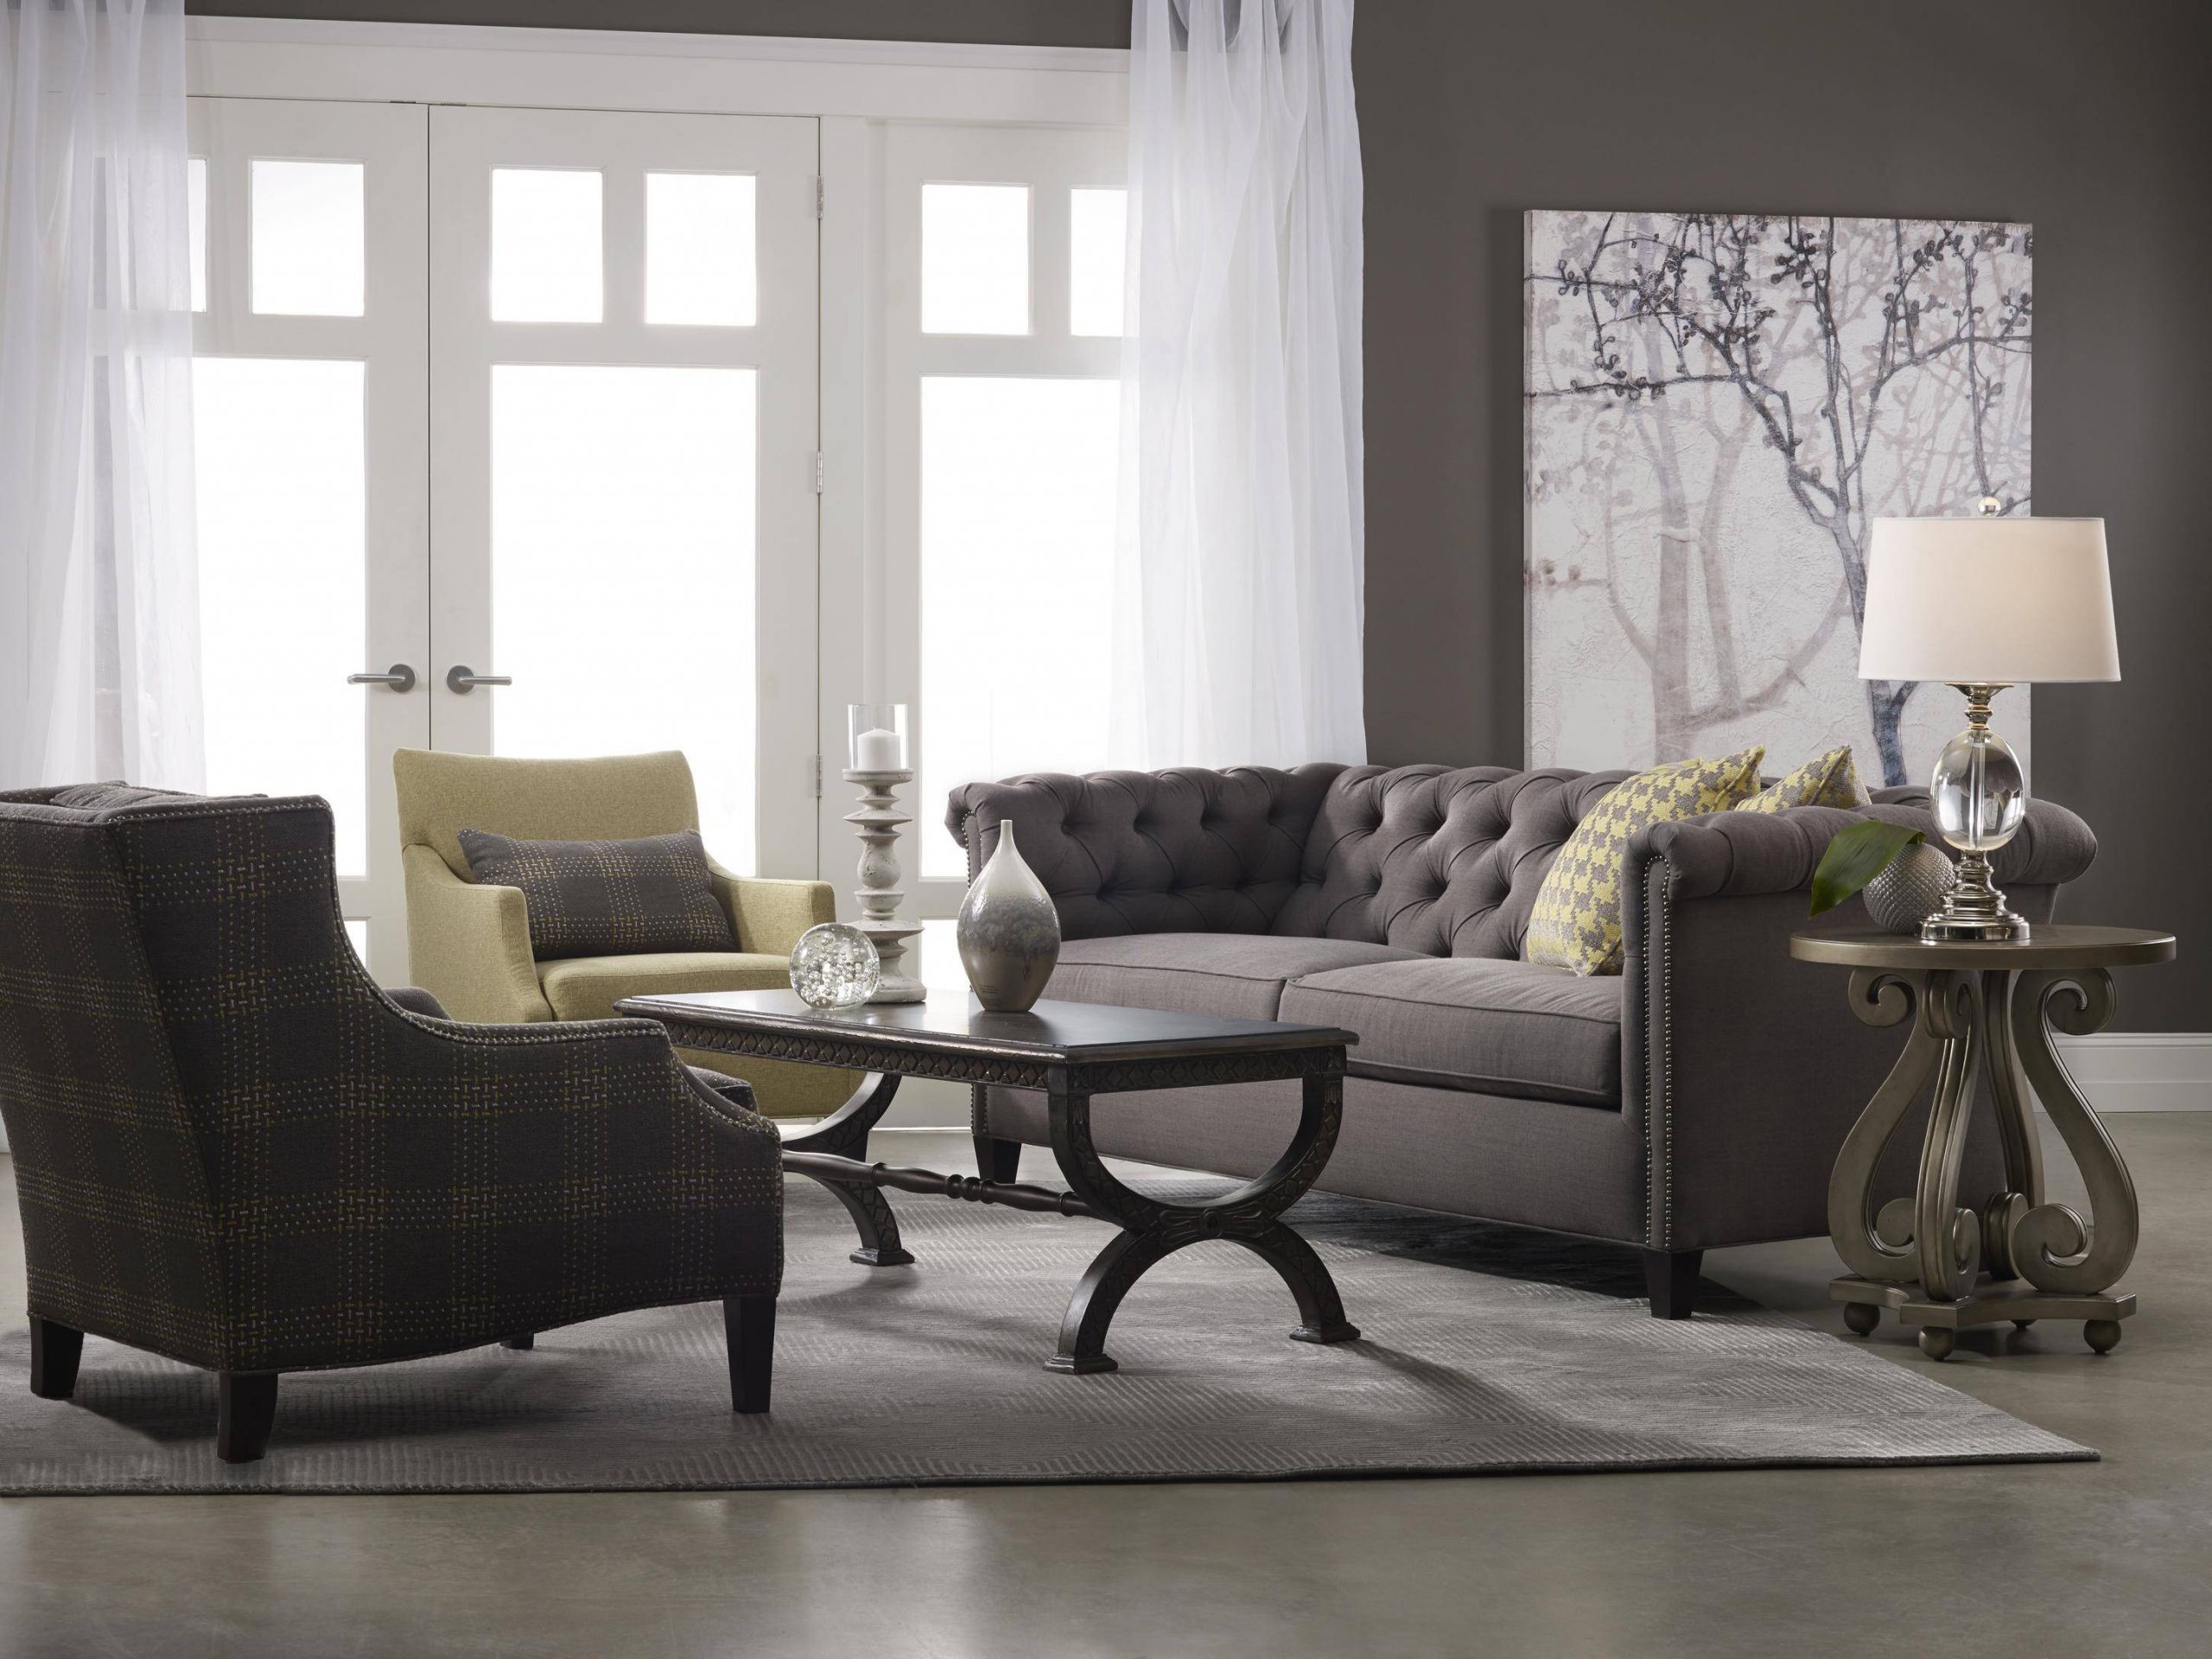 Beautiful Rugs For Living Room
 Geometric Rugs Ideas For Beautiful Living Room and